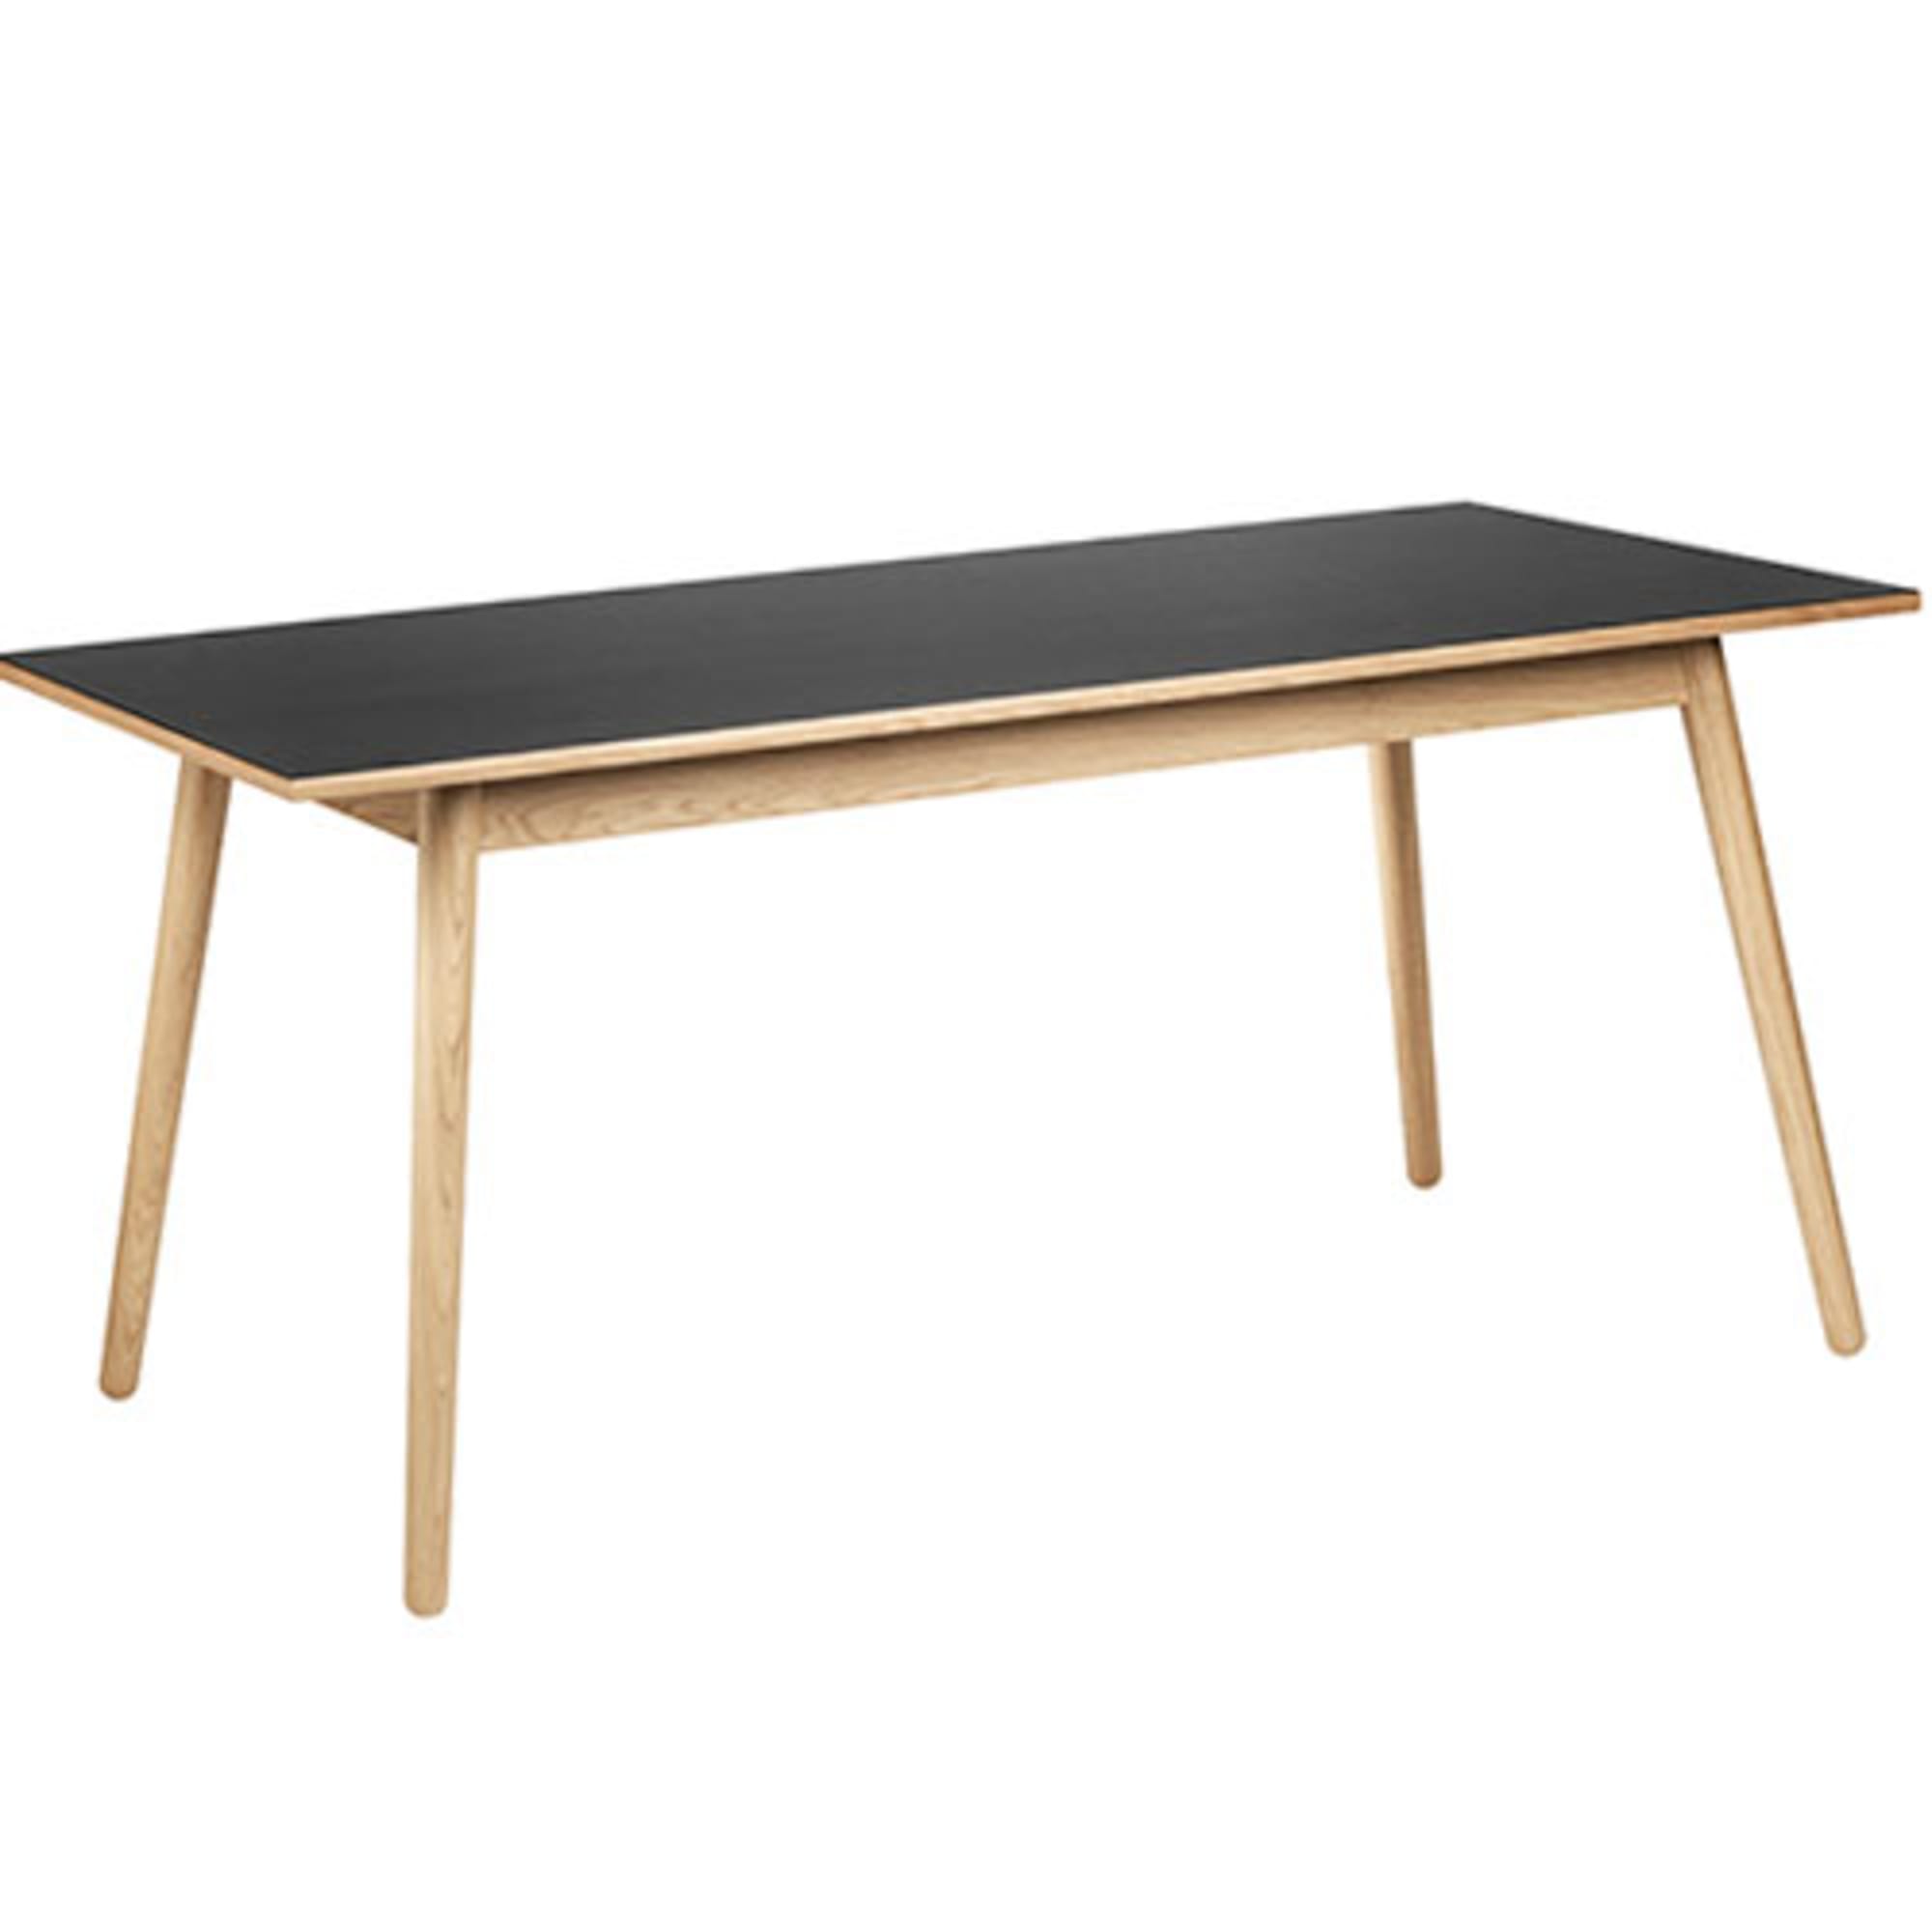 FDB Møbler C35 C Jídelní stůl pro 8 osob dubu, černý linoleum top, 95x220cm